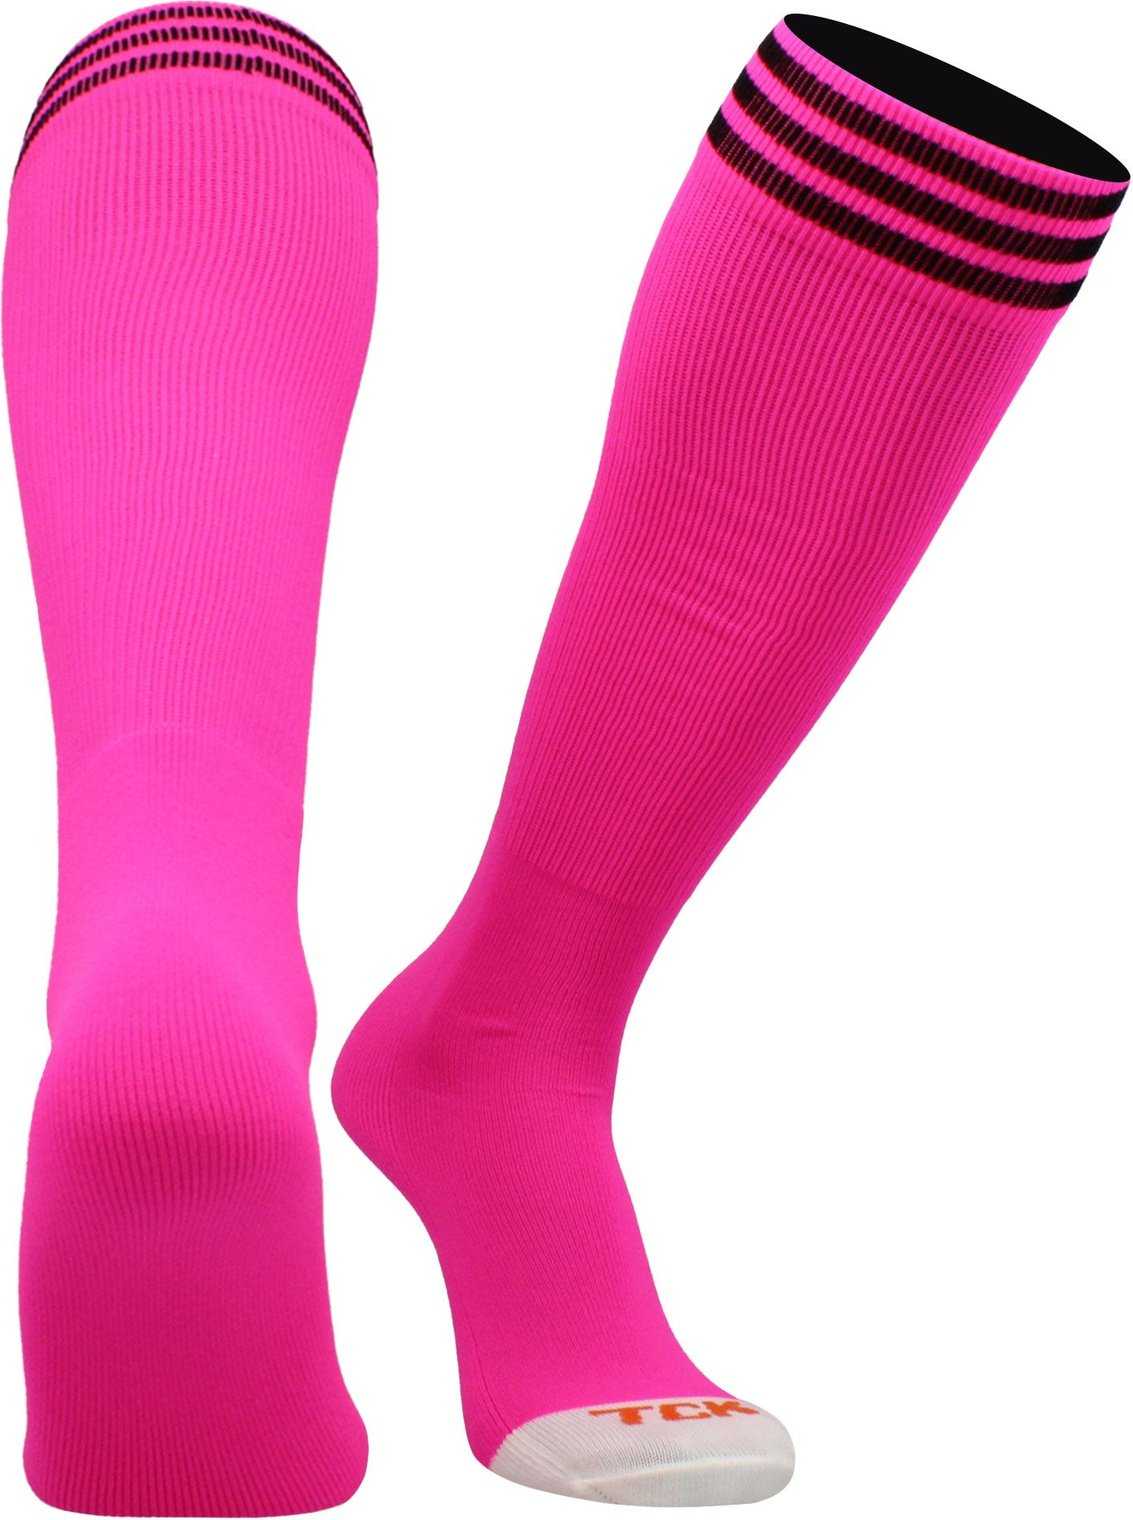 TCK Prosport Striped Knee High Tube Socks - Hot Pink Black